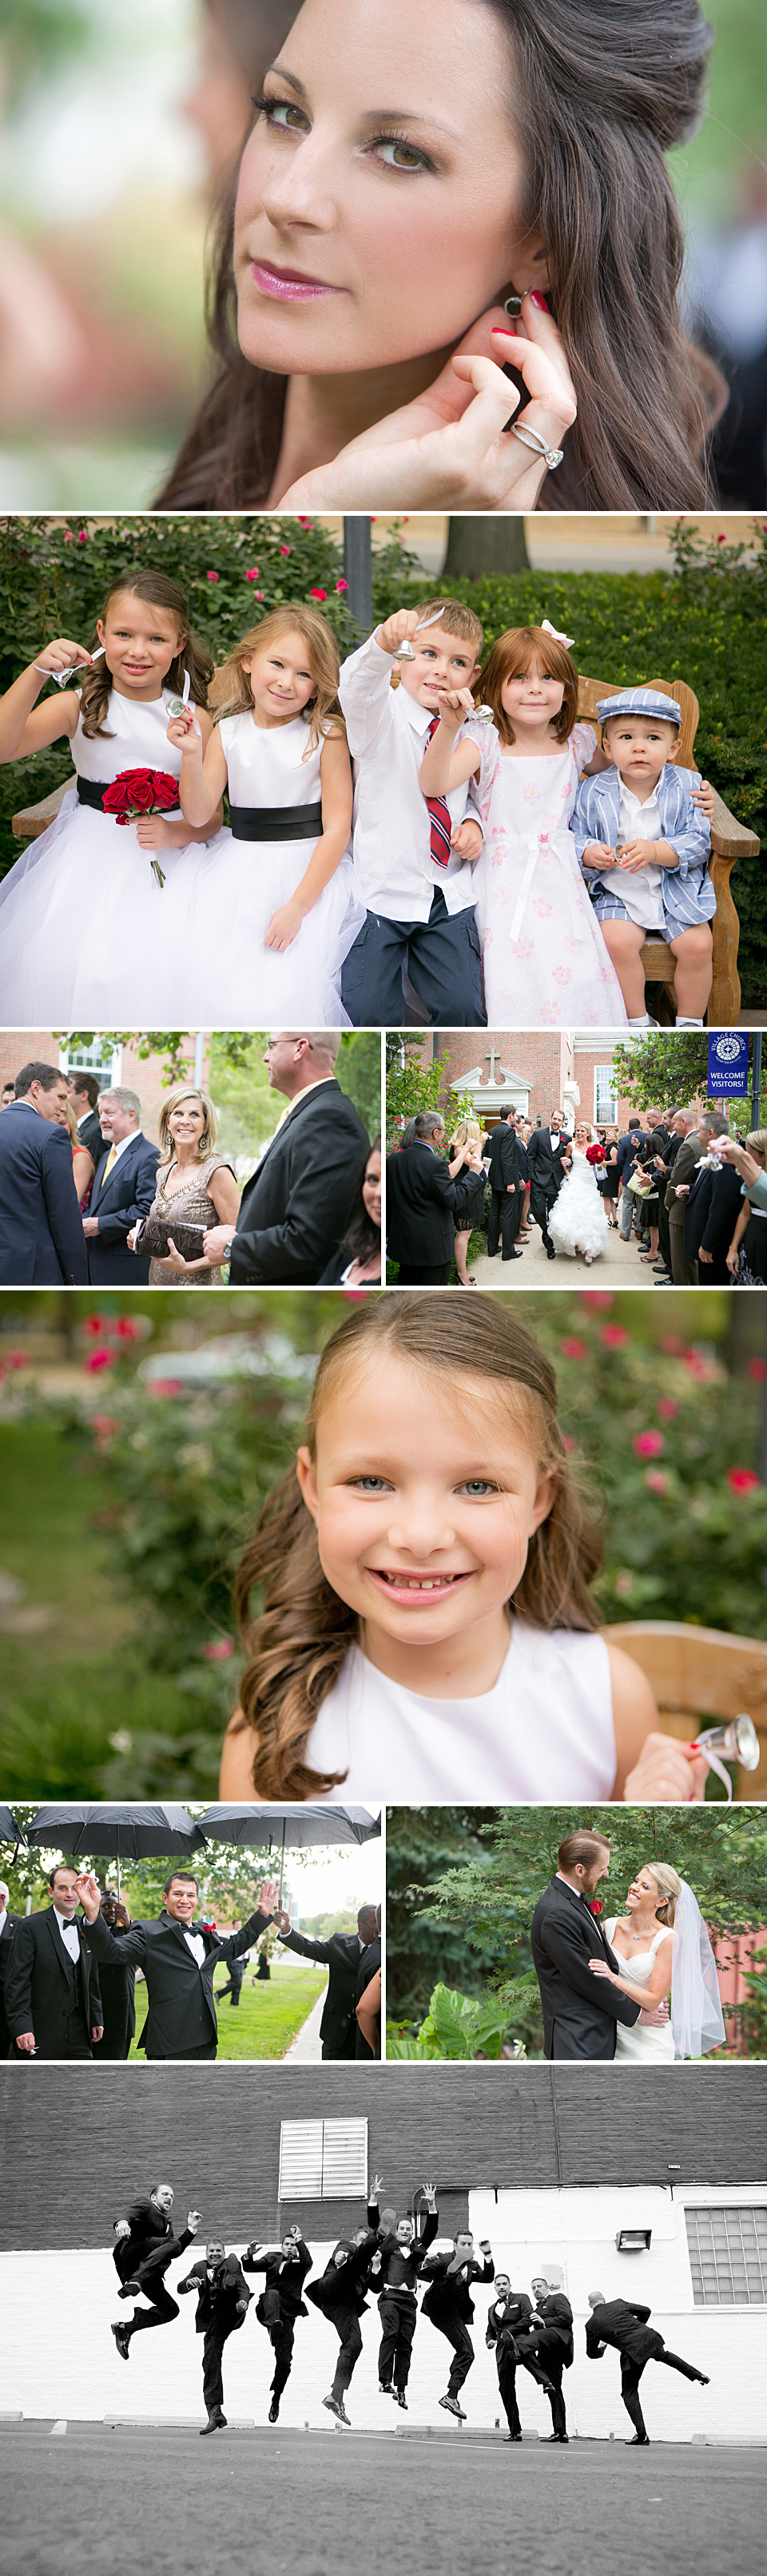 Reds and blacks, elegant modern weddings, Kansas City wedding photographer, Bridal exit, Ring boys, children dressed up, flower girls